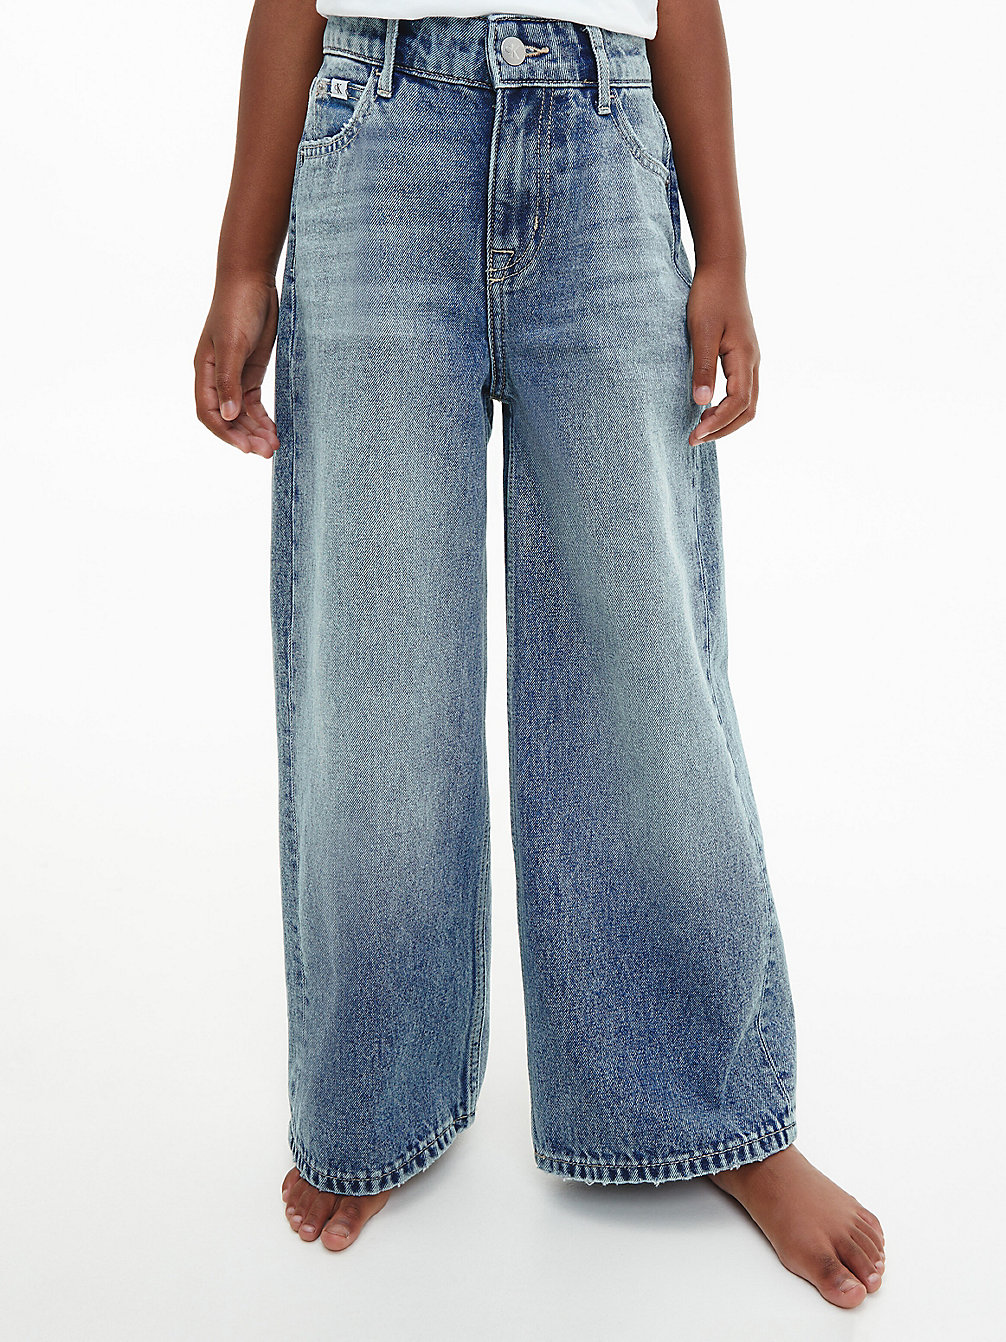 VISUAL LIGHT BLUE Extreme Wide Leg Jeans undefined girls Calvin Klein